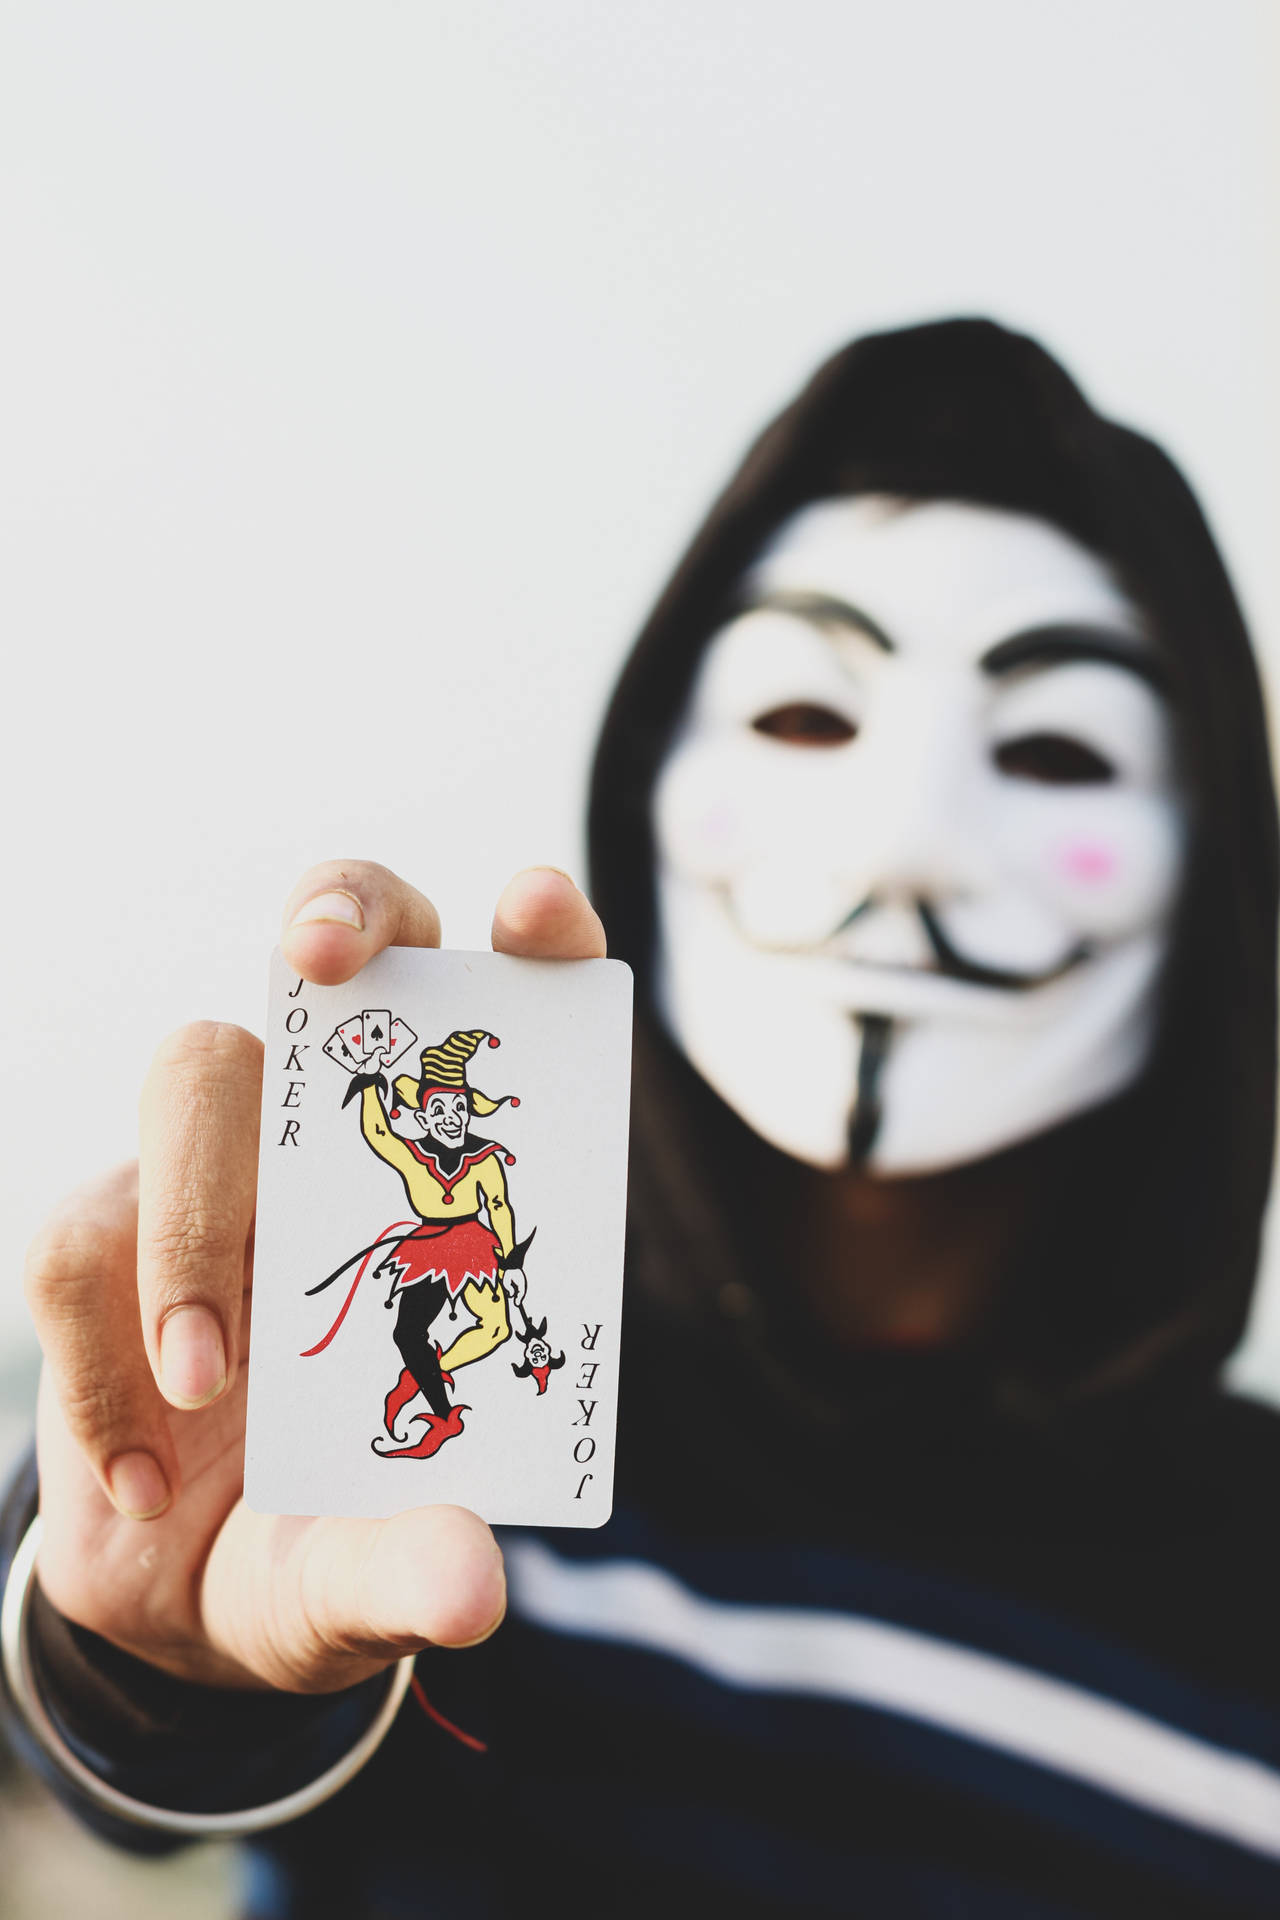 Joker Card And Hacker Mask